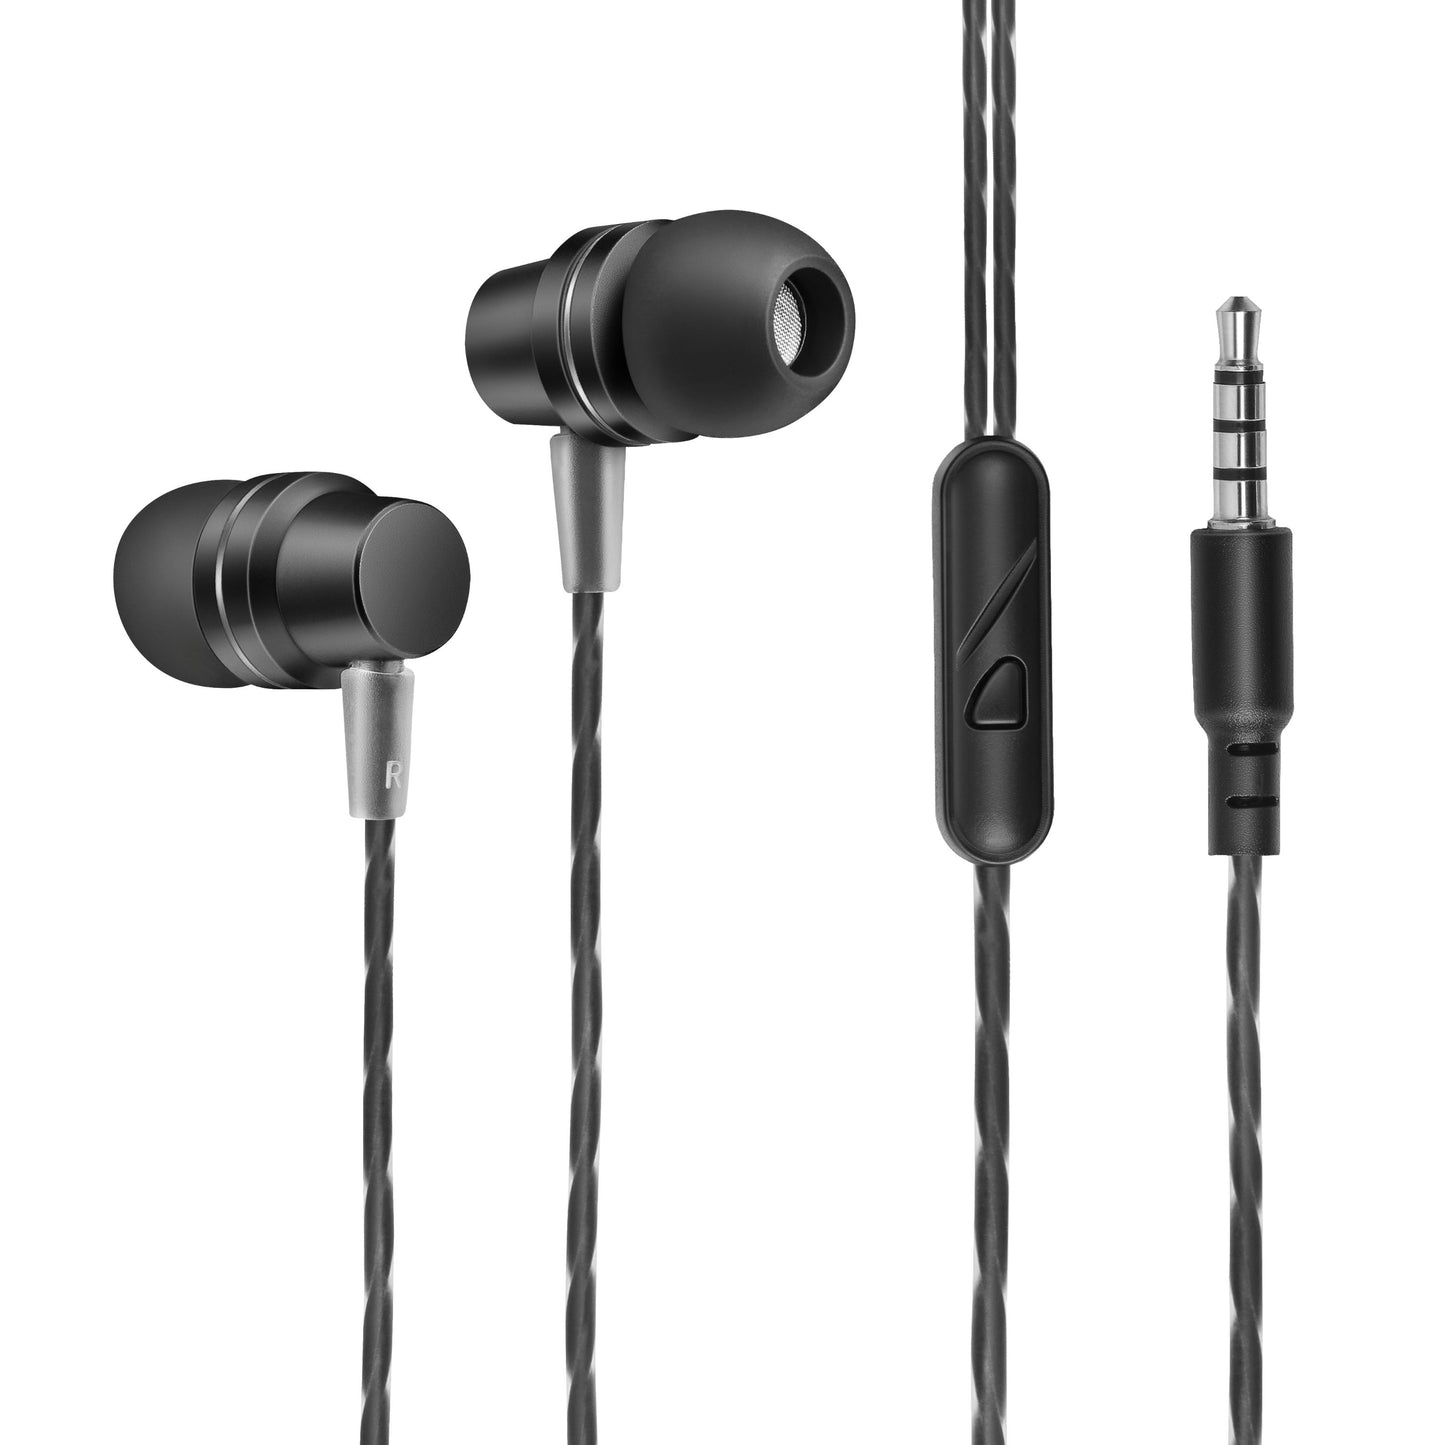 BASSSHOTS MWE-X150 In-Ear Wired Earphones with Mic